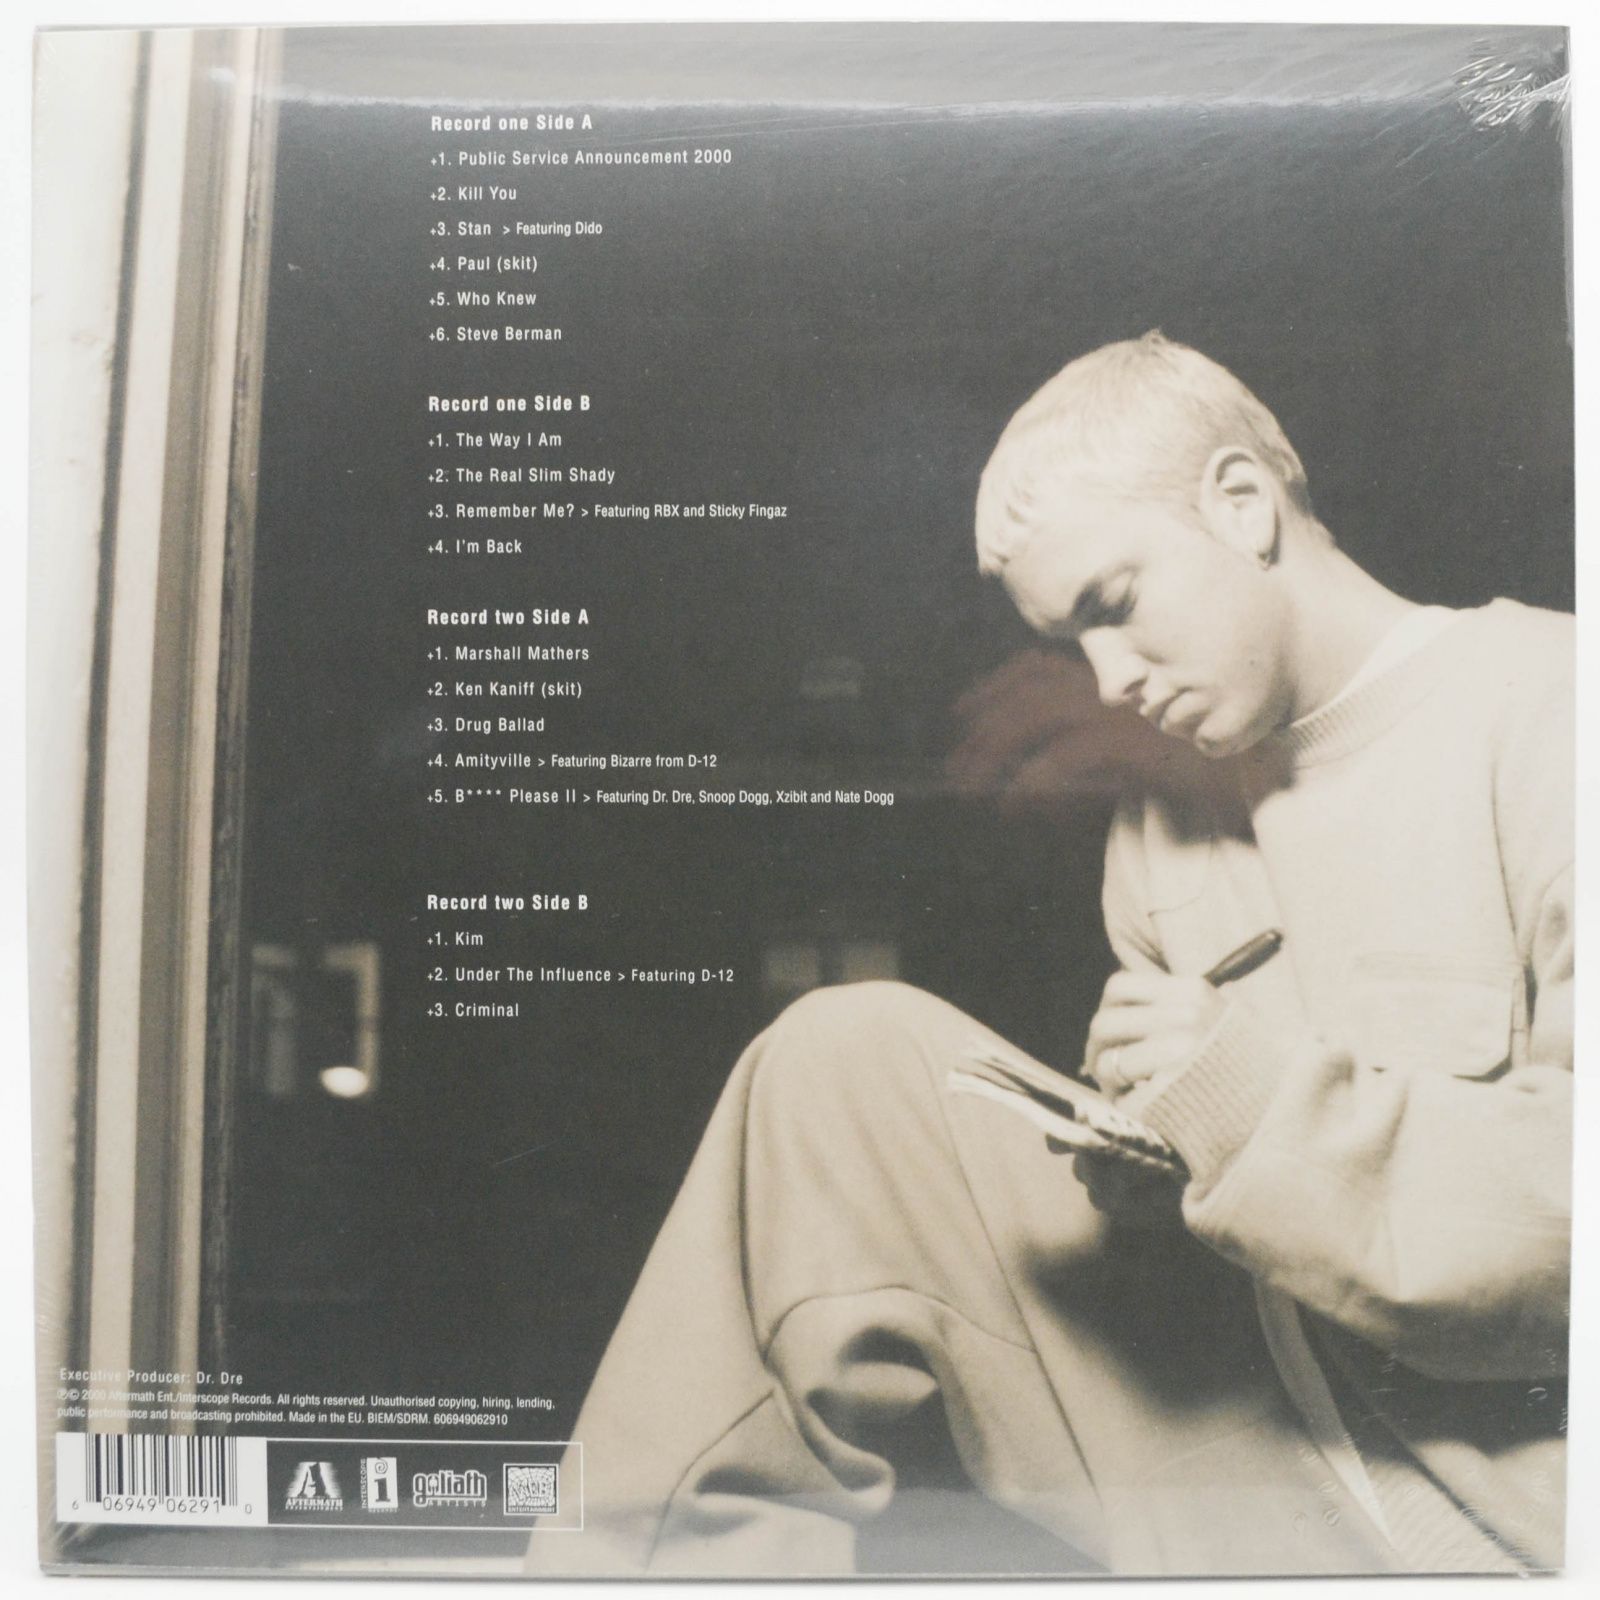 Eminem — The Marshall Mathers LP (2LP), 2000